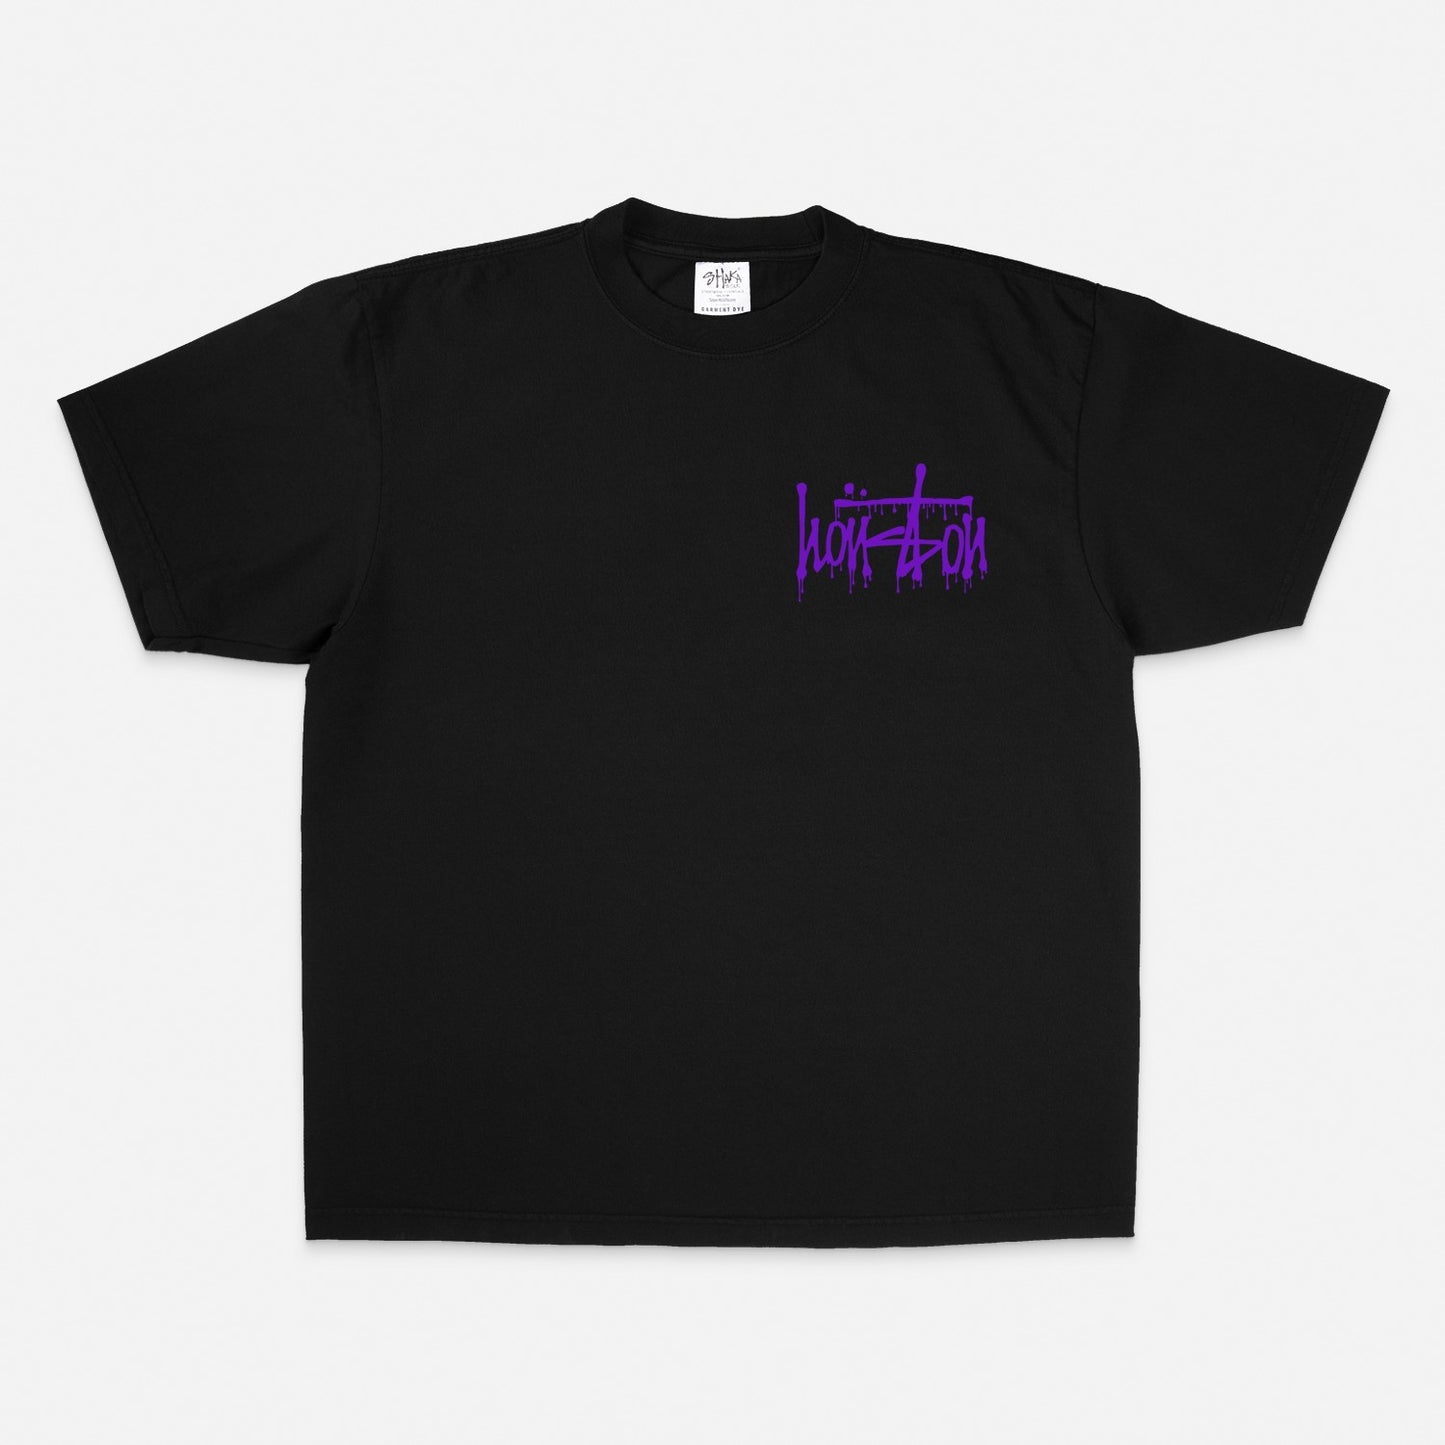 Our Houston Purple Drip T-Shirt